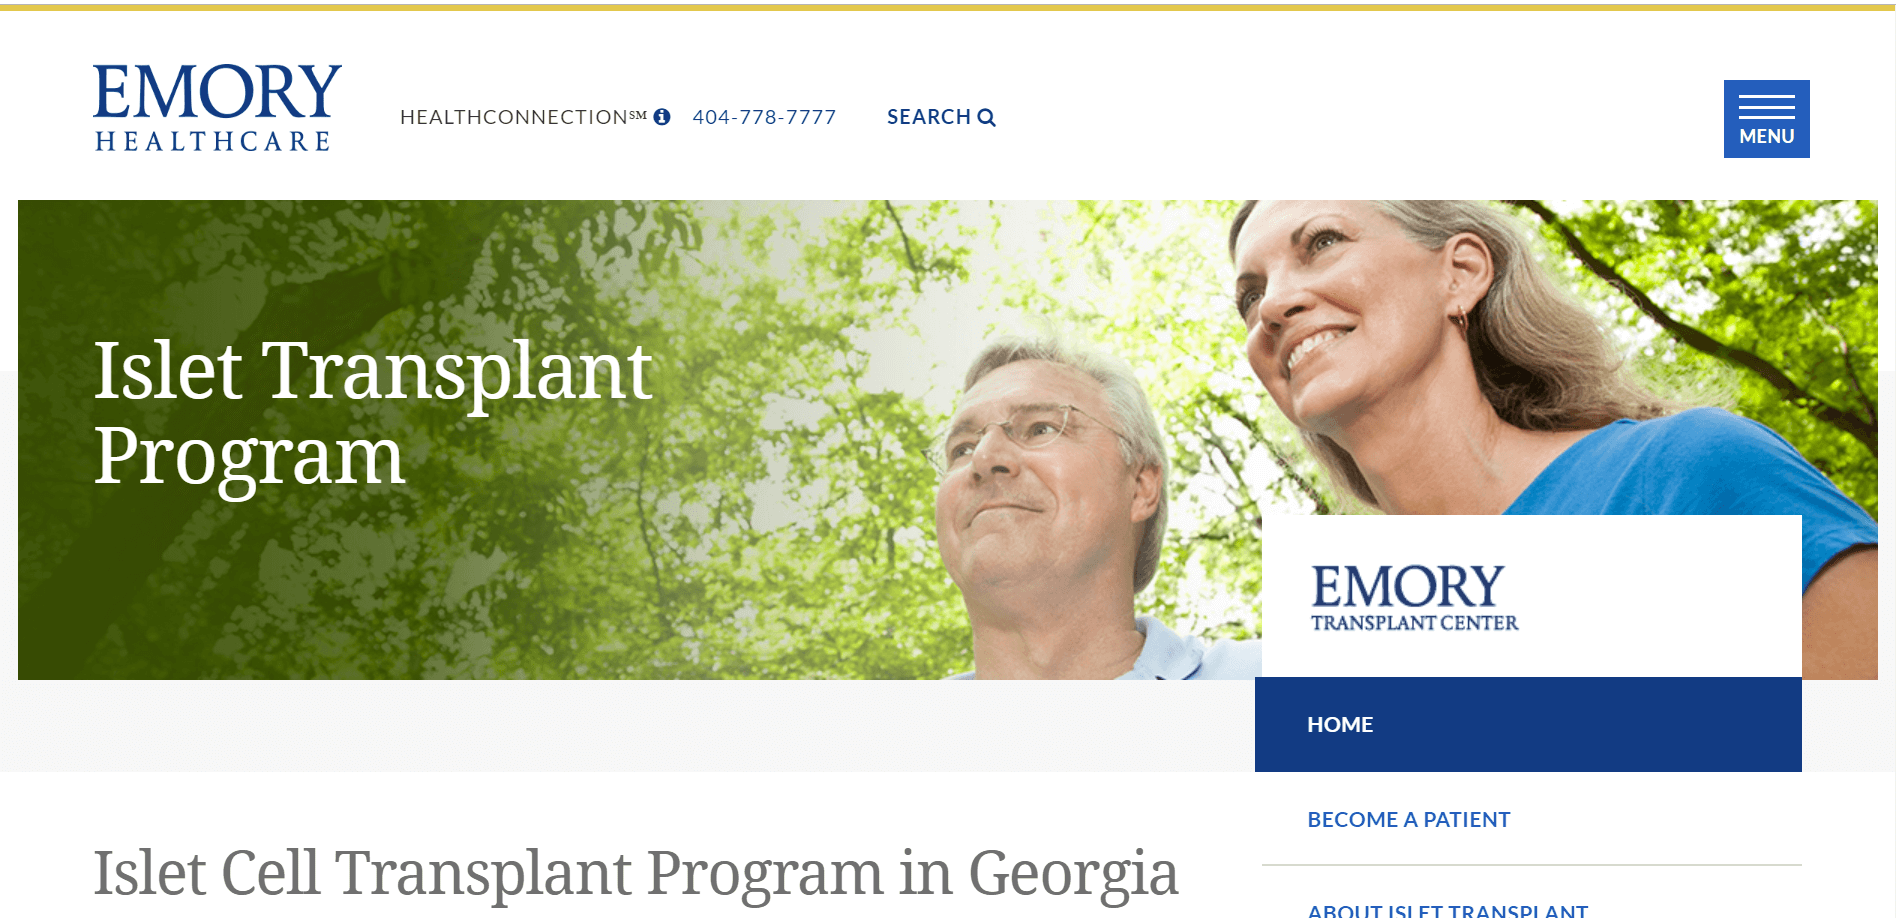 Emory Islet Transplant Program, Emory Healthcare Transplant Center